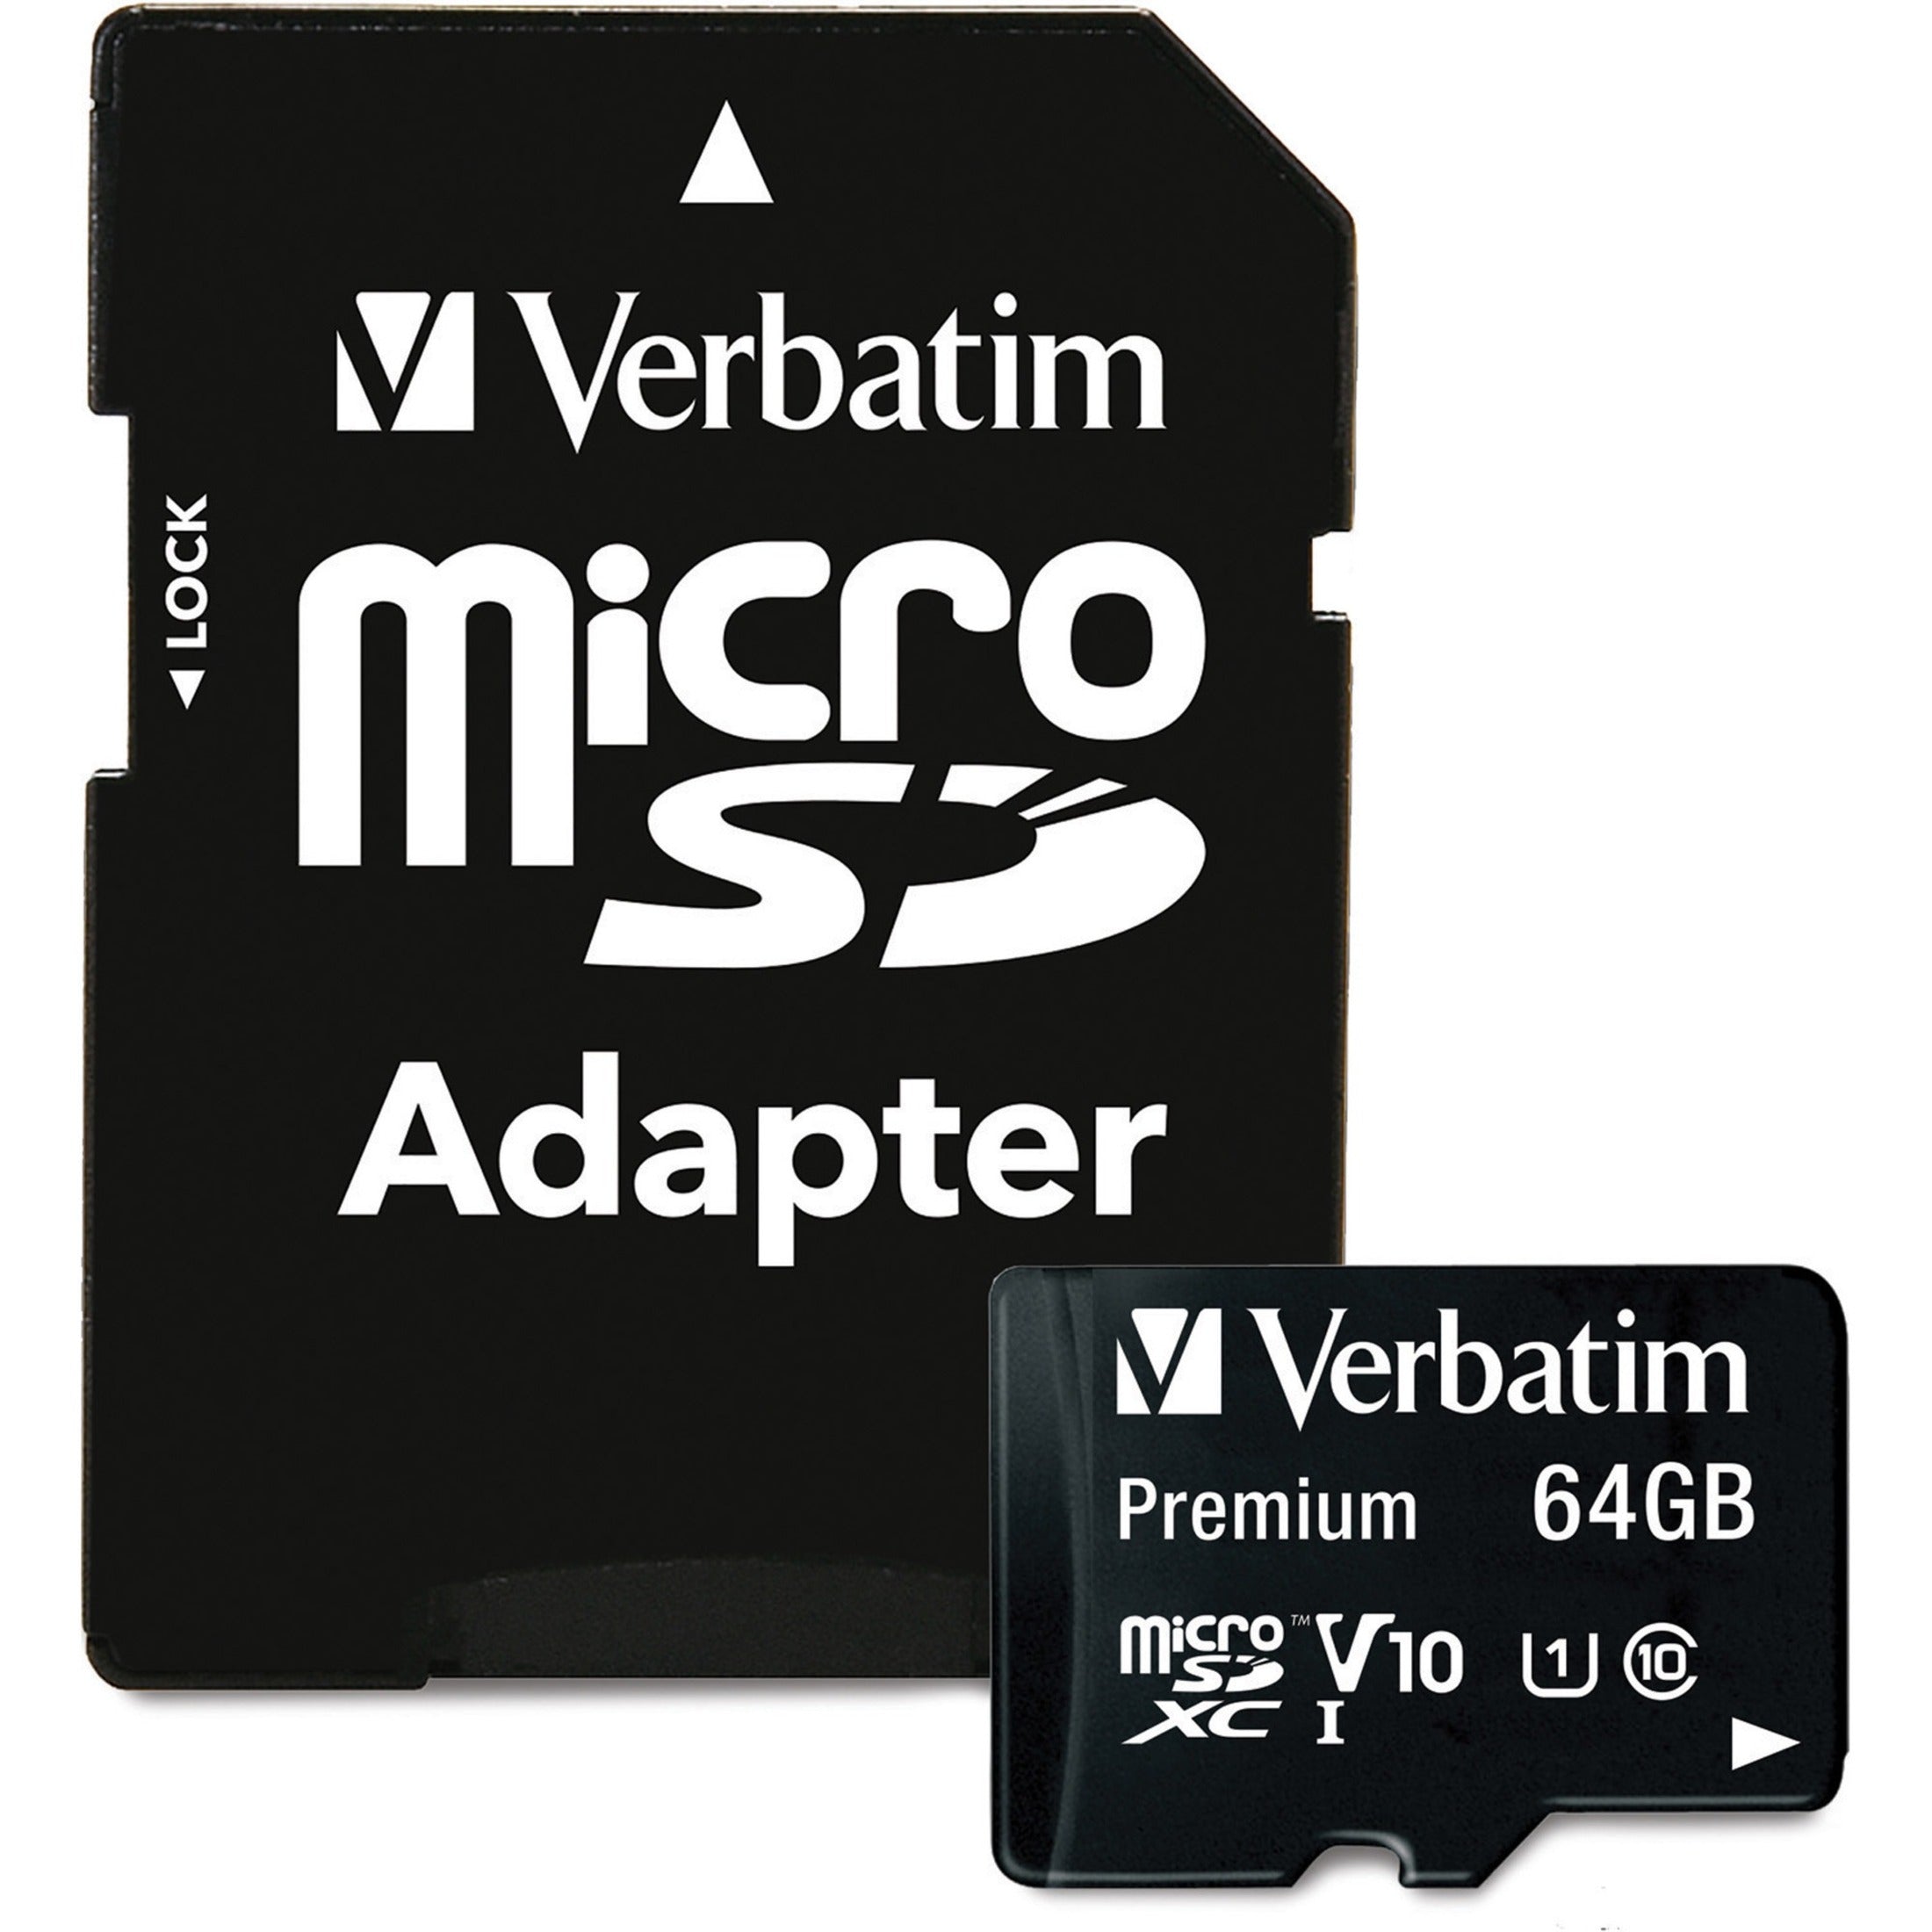 Verbatim 44084 Mirco SD card, 64GB, Black, Lifetime Warranty